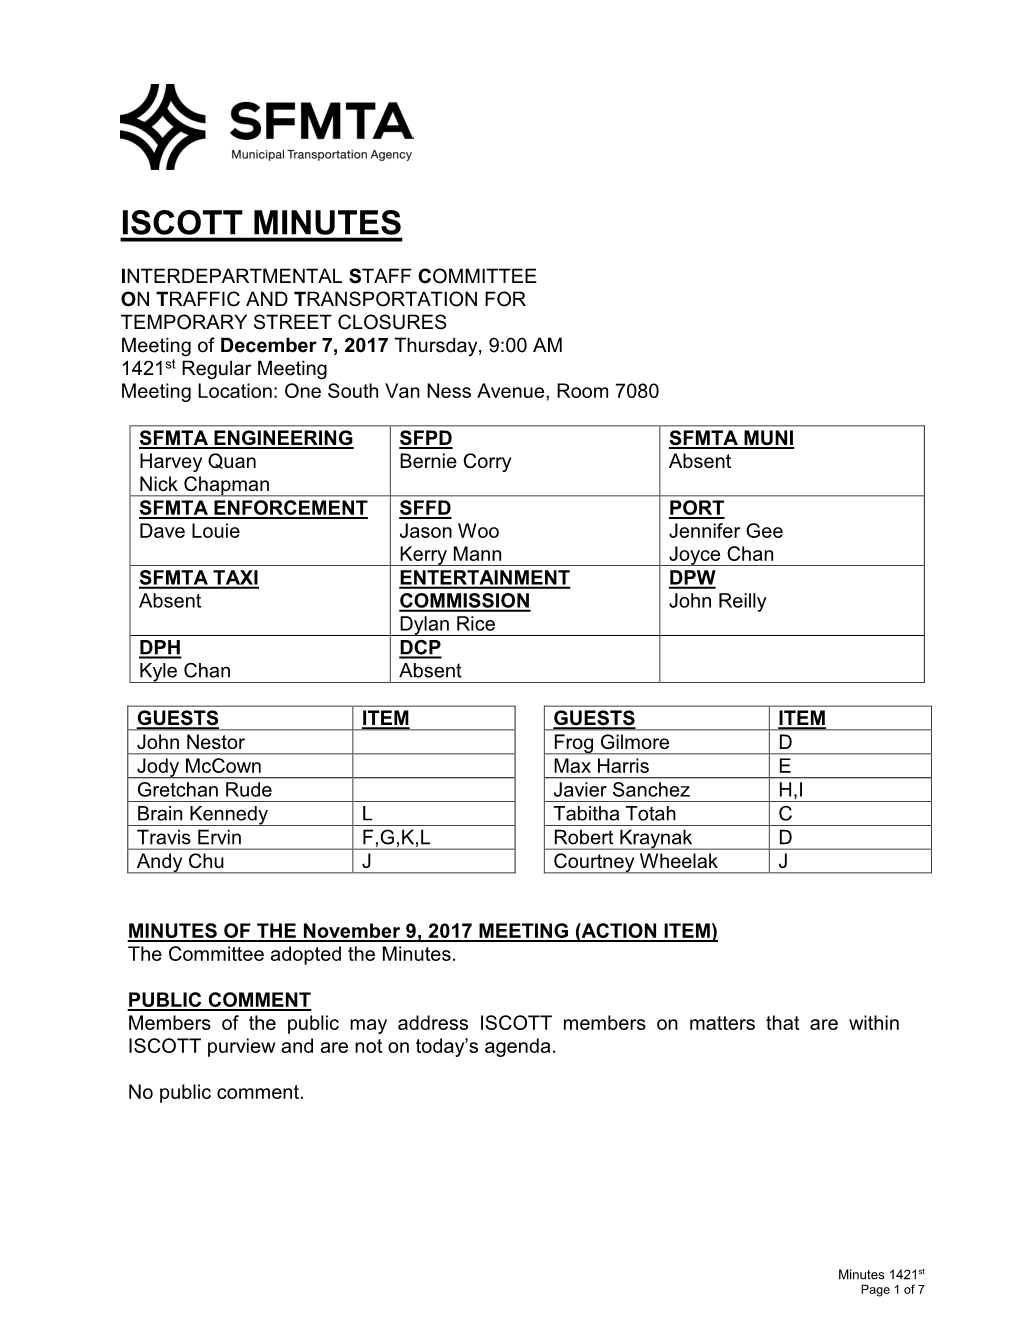 ISCOTT Meeting 1421, December 7Th, 2017